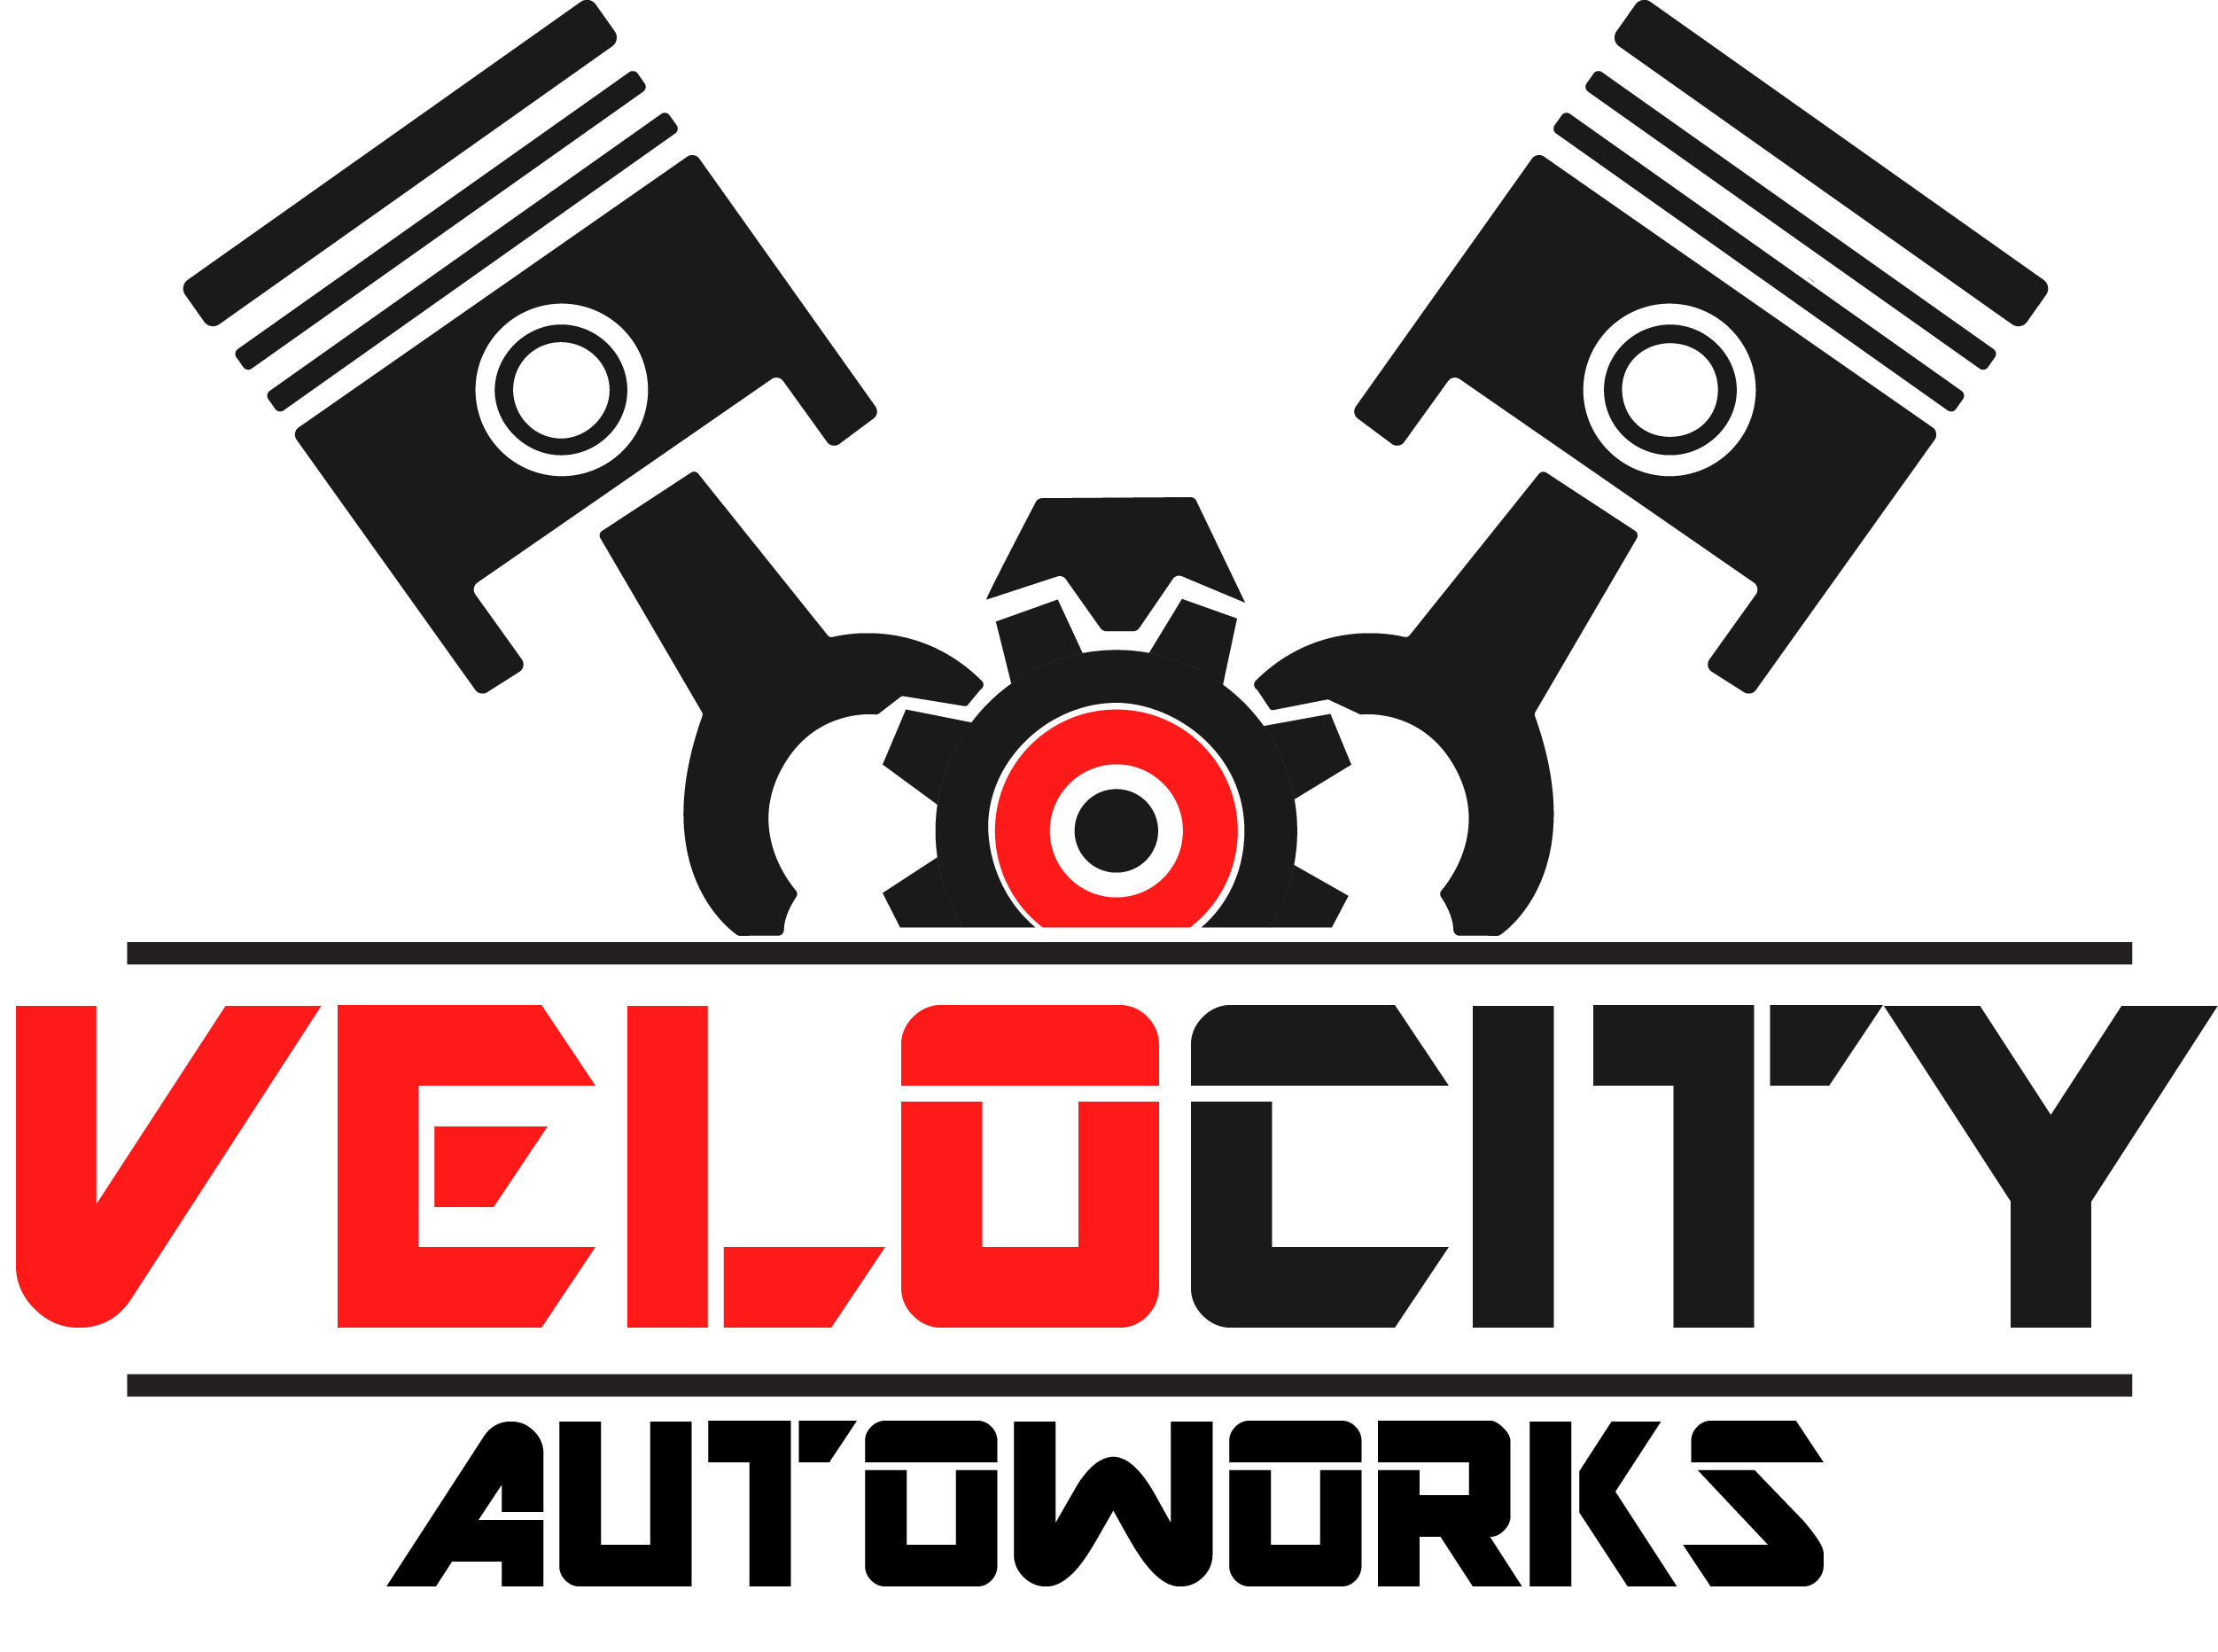 Velocity logo finalized color